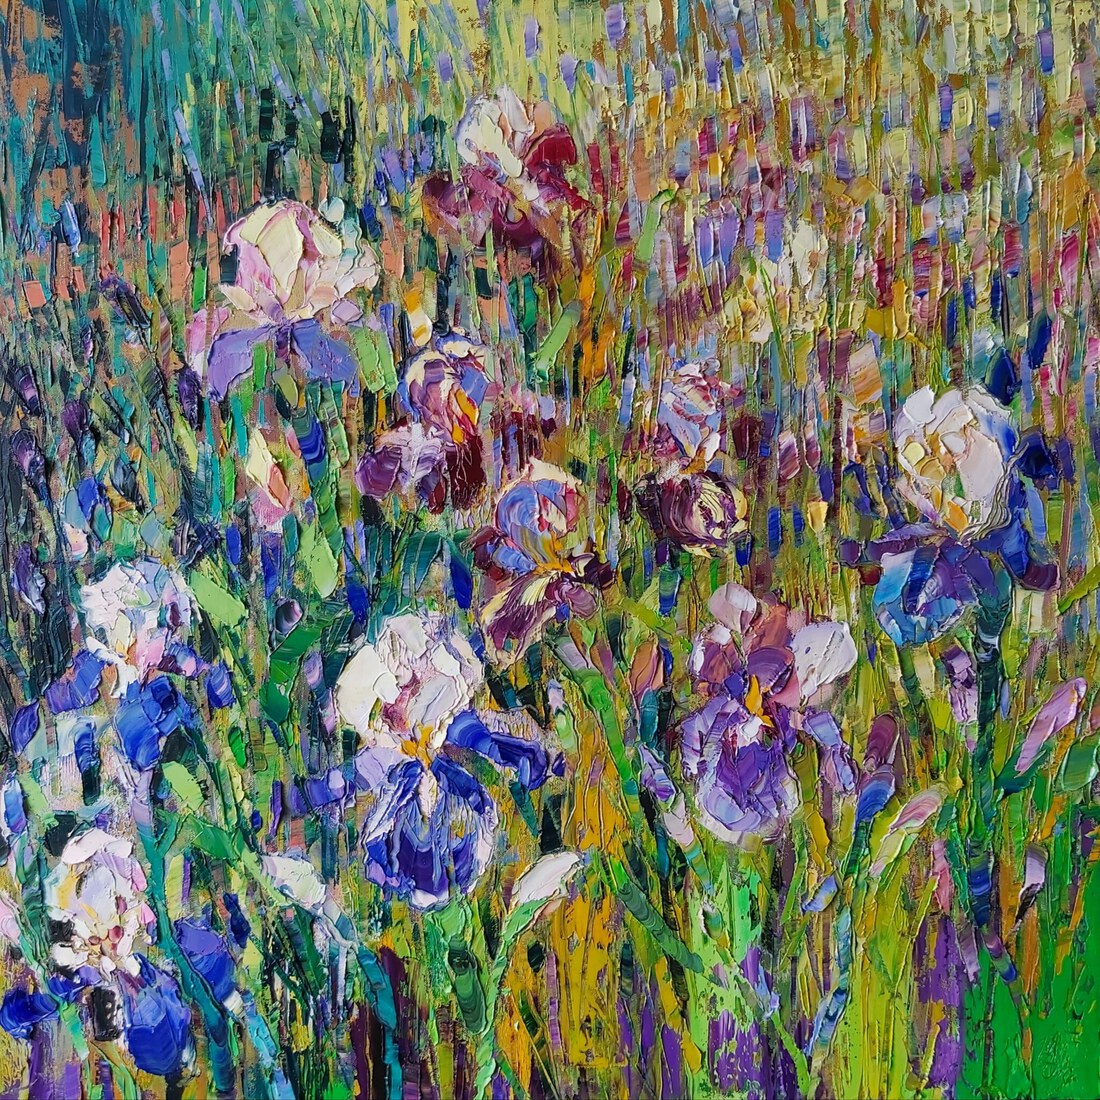 Field of irises